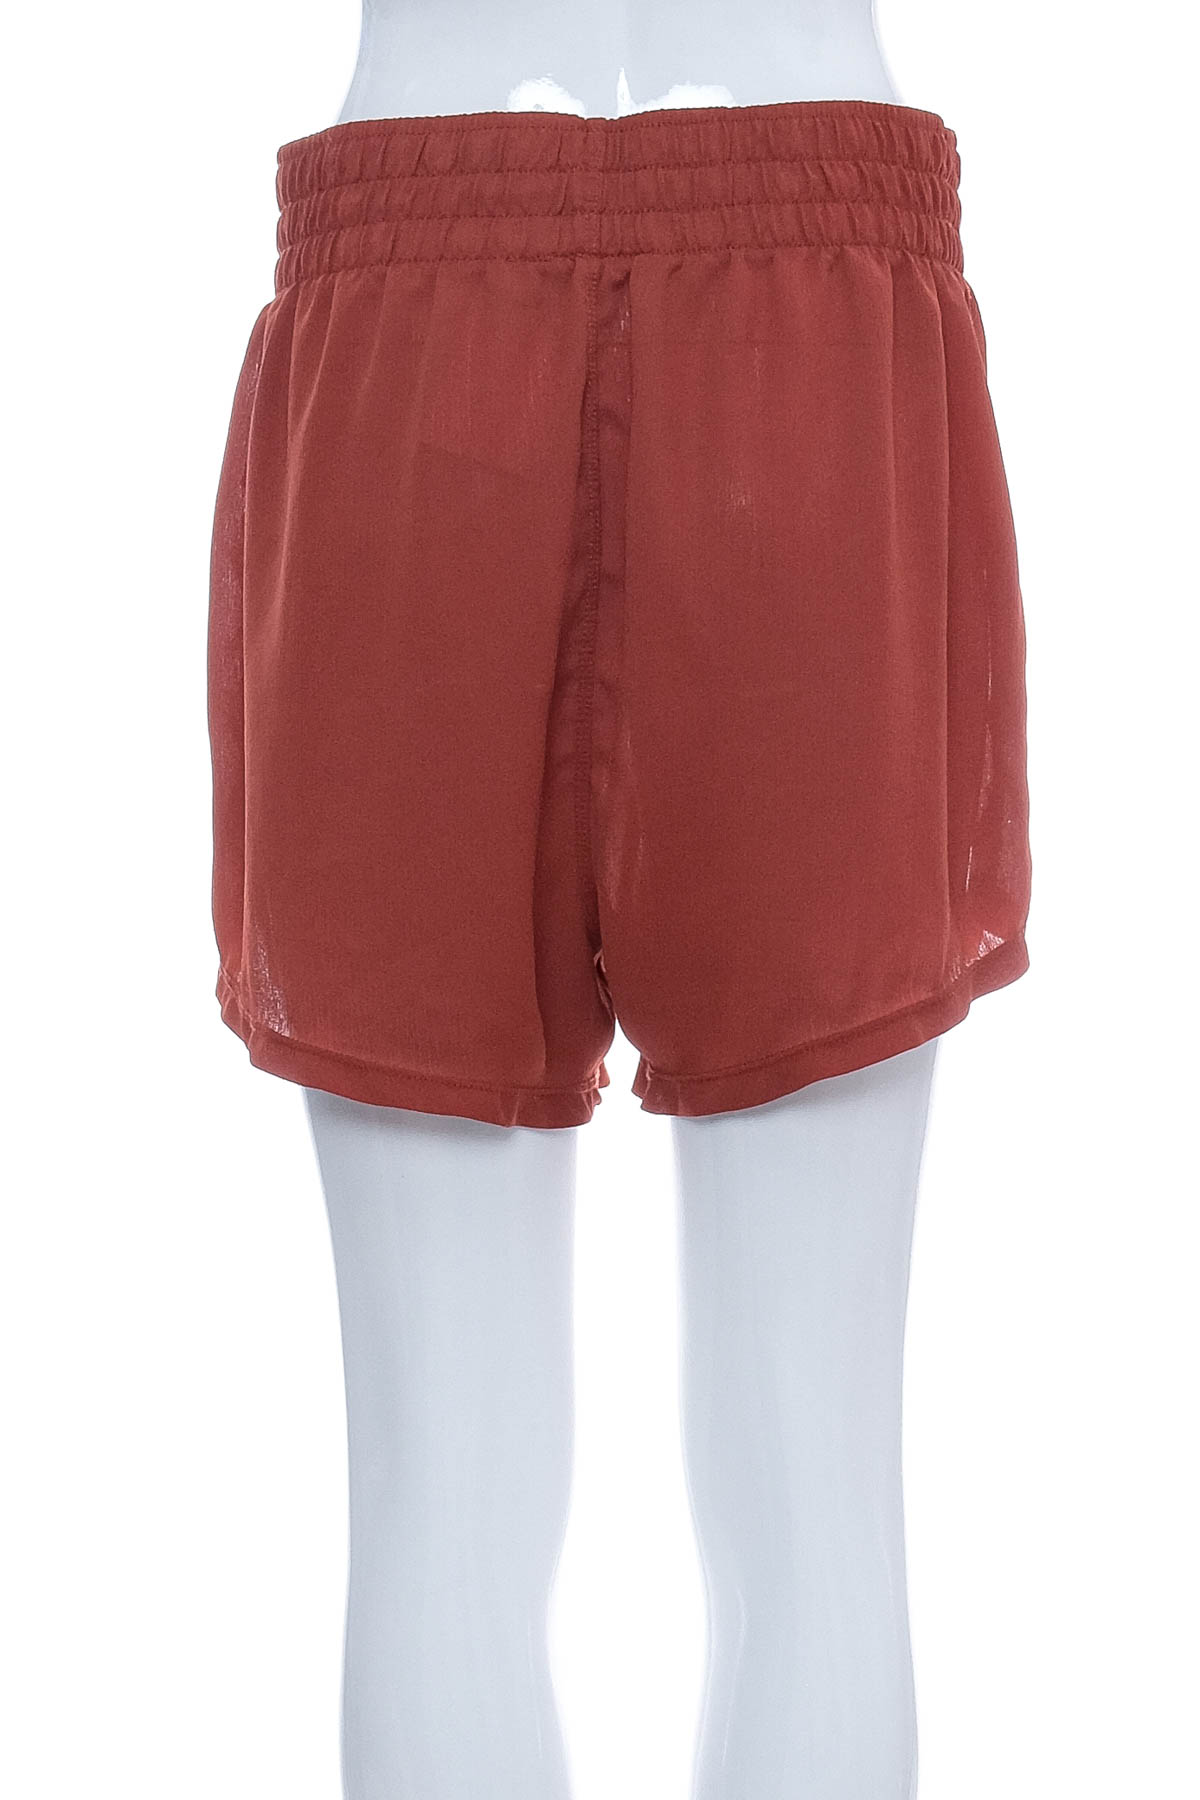 Krótkie spodnie damskie - Asos - 1